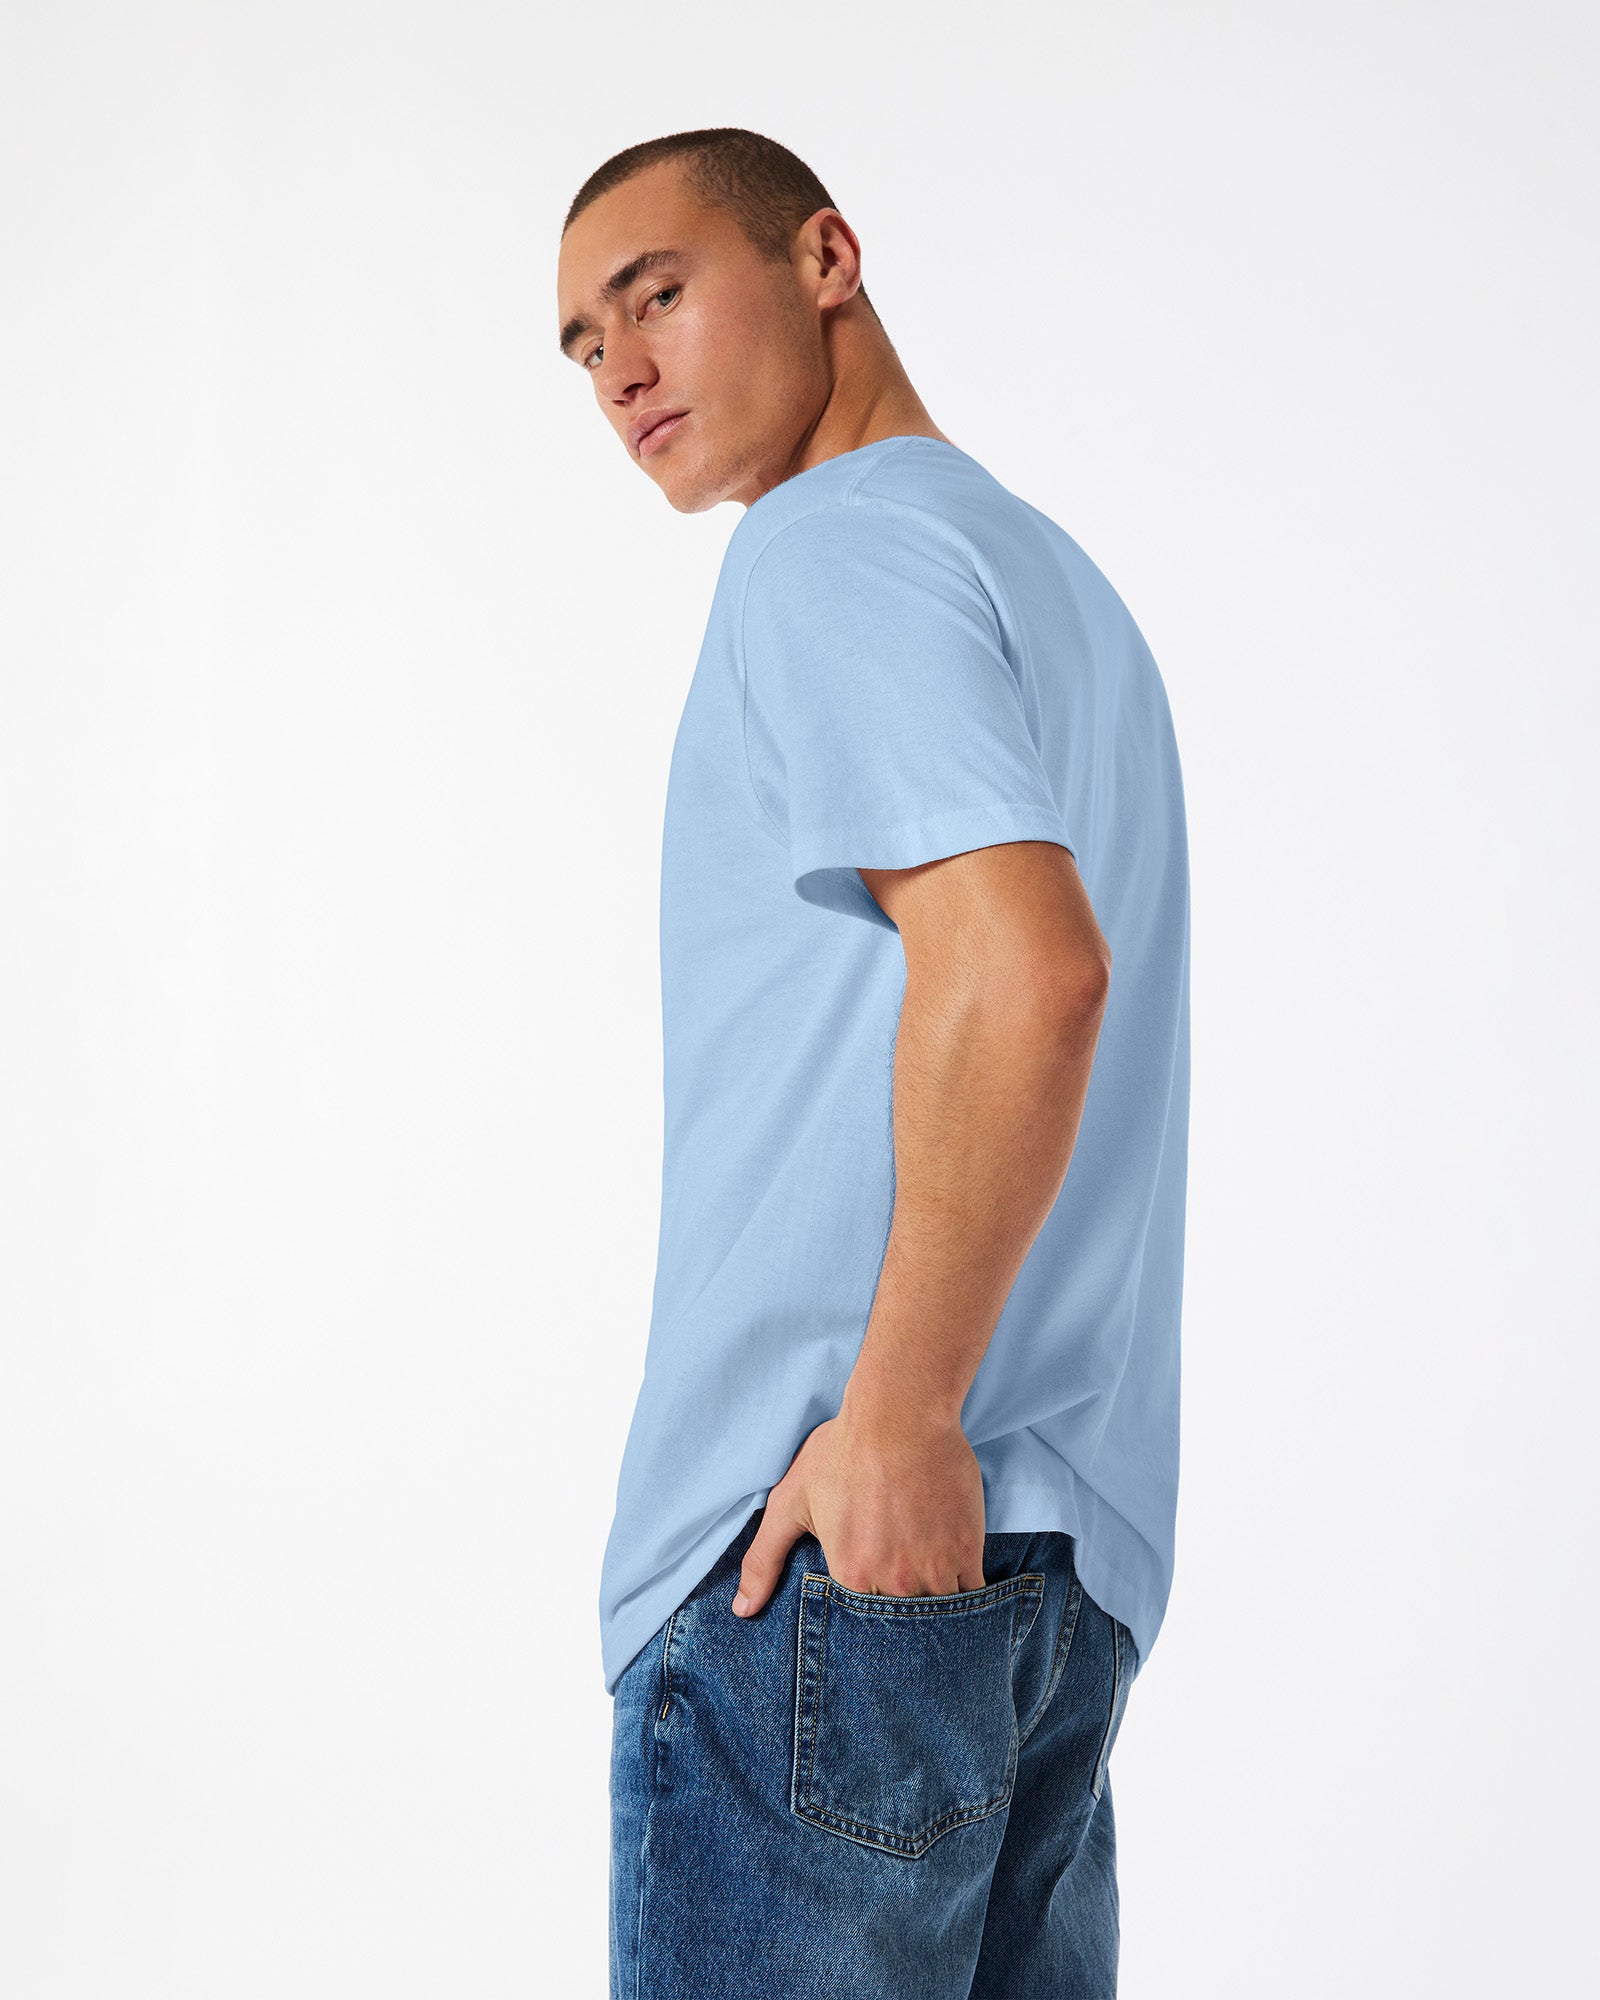 Heavyweight Unisex T-Shirt - Powder Blue